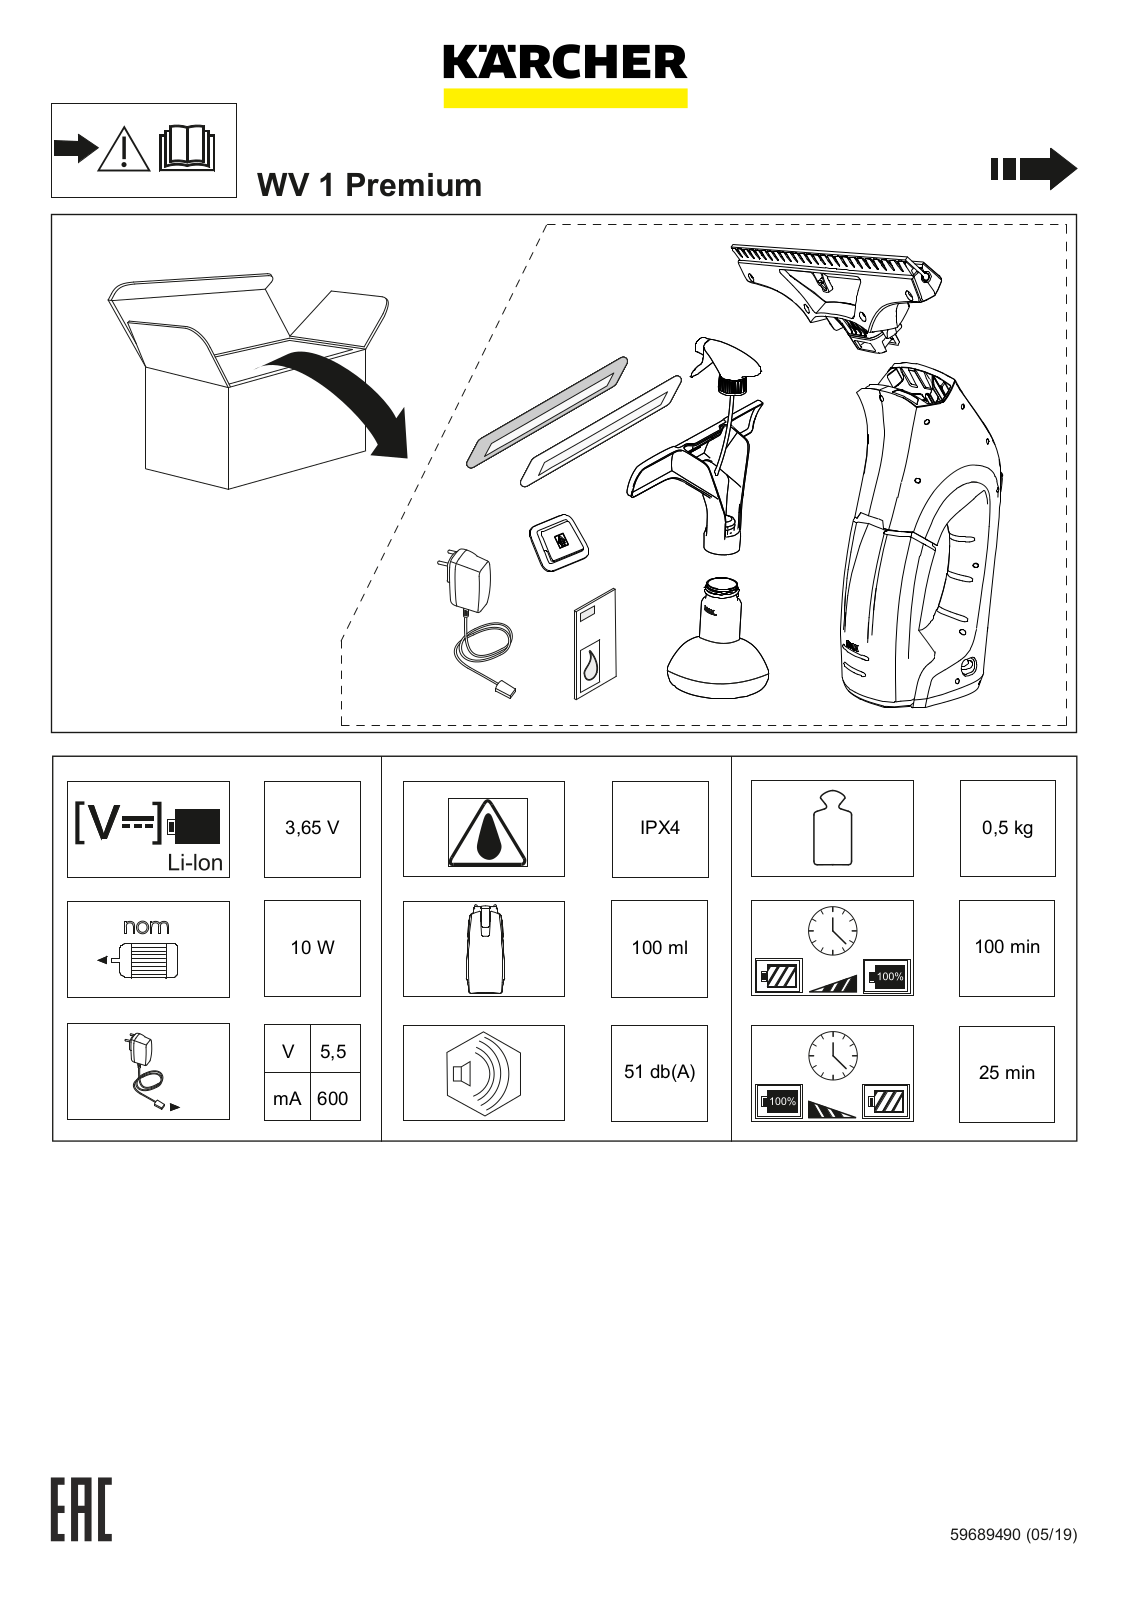 Karcher WV 1 Plus User Manual